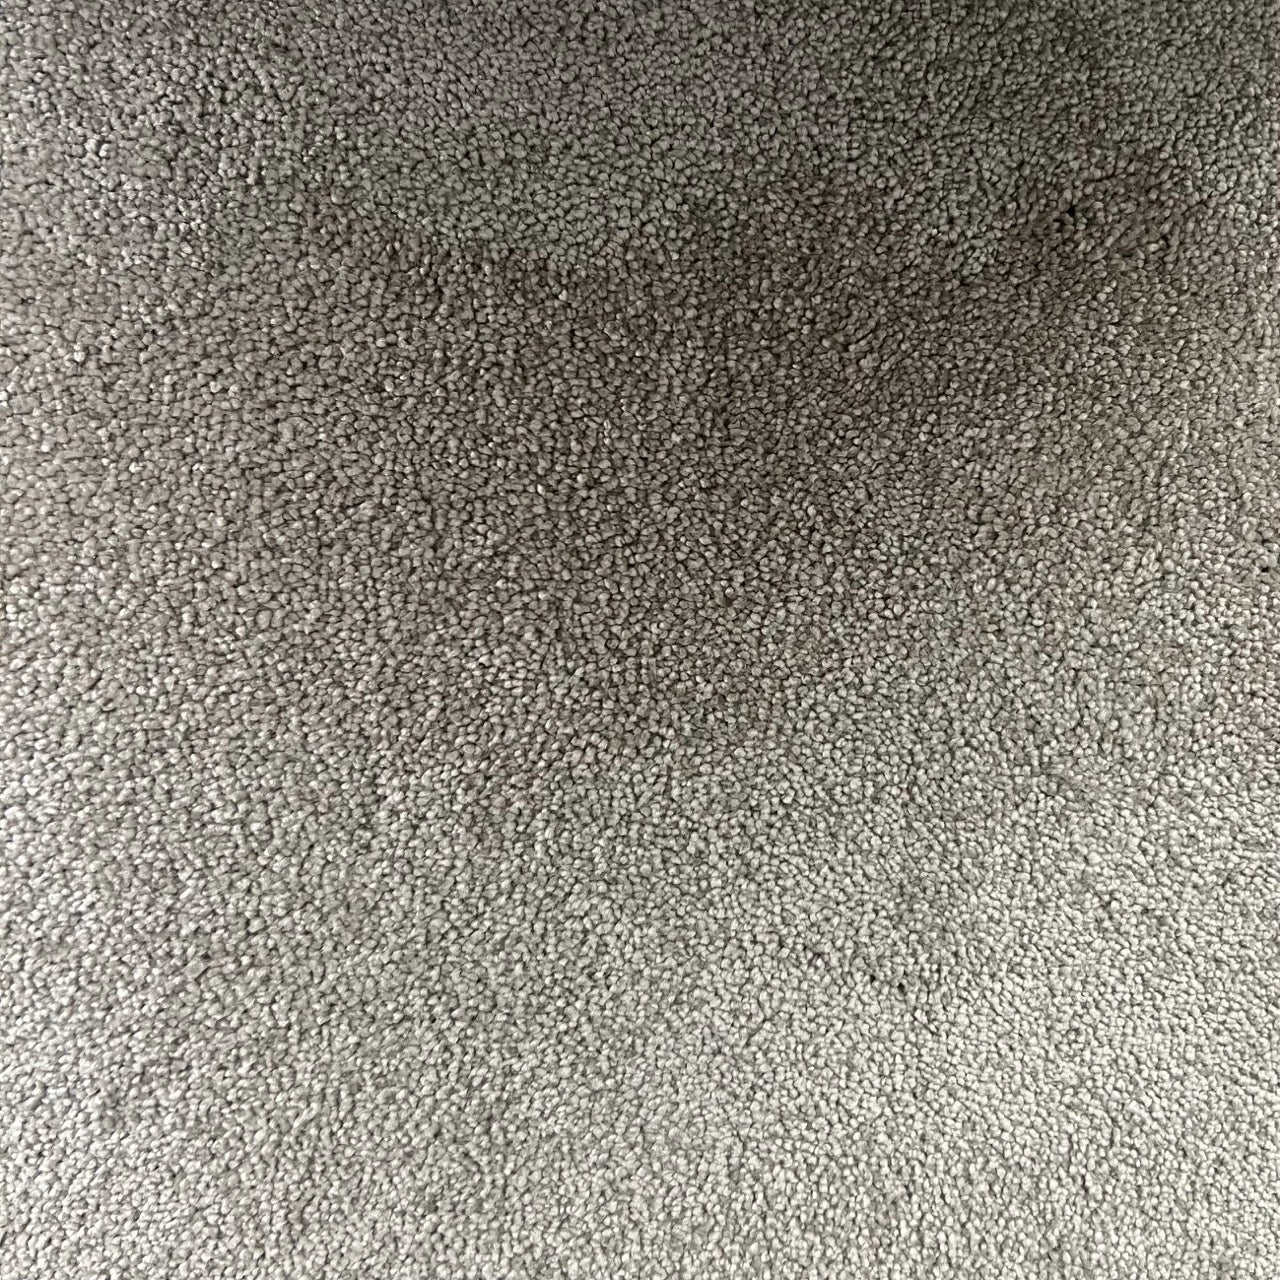 Dorado Morning Mist 3.35 x 4 m Roll End Carpet